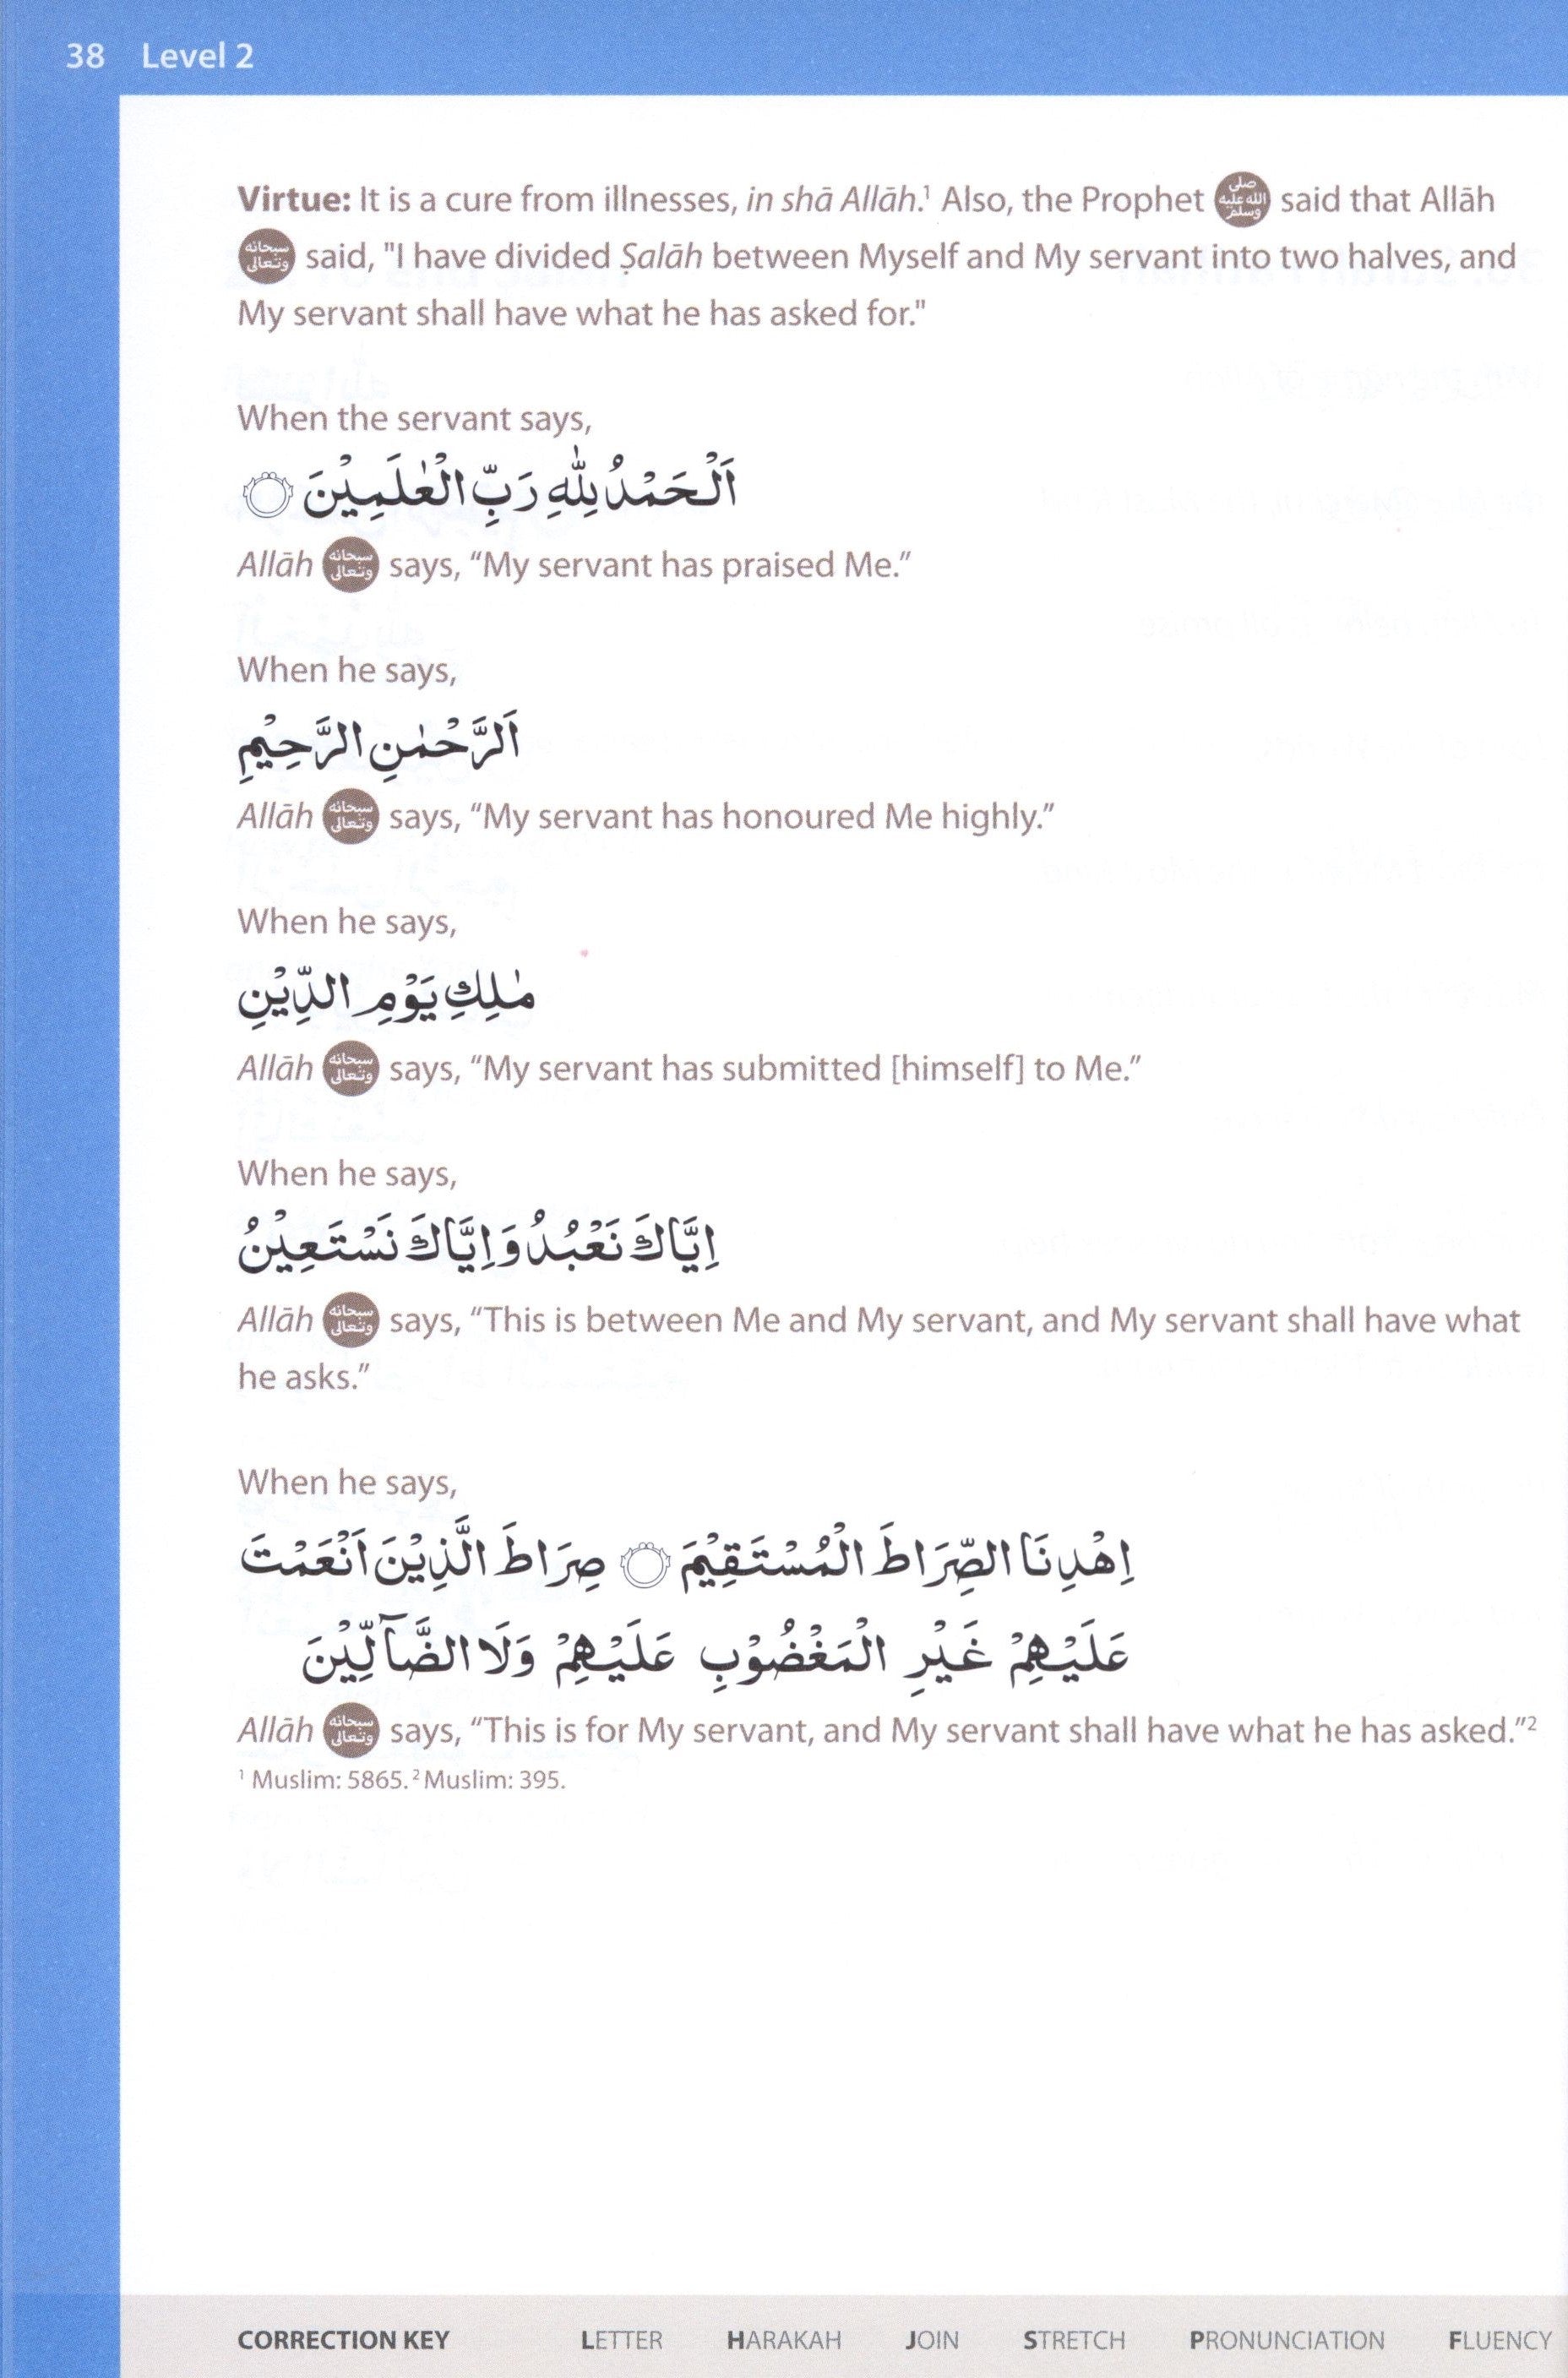 Essential Duas and Surahs Book 1 (Urdu Script)